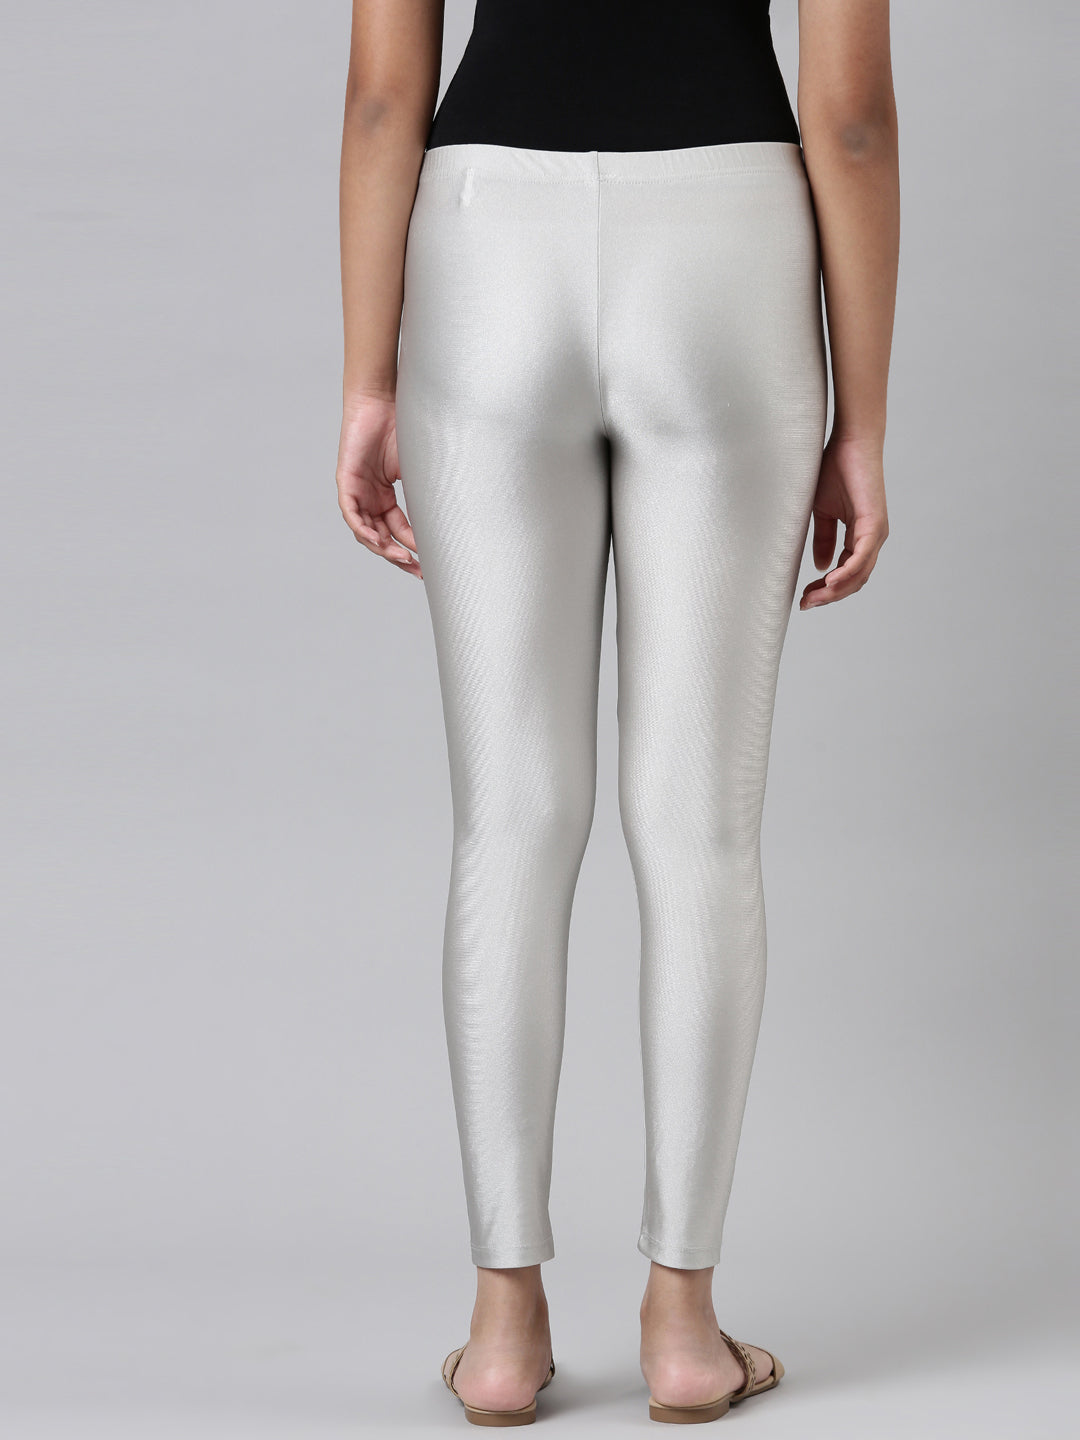 Buy Go Colors Silver Shimmer Leggings (XL) Online